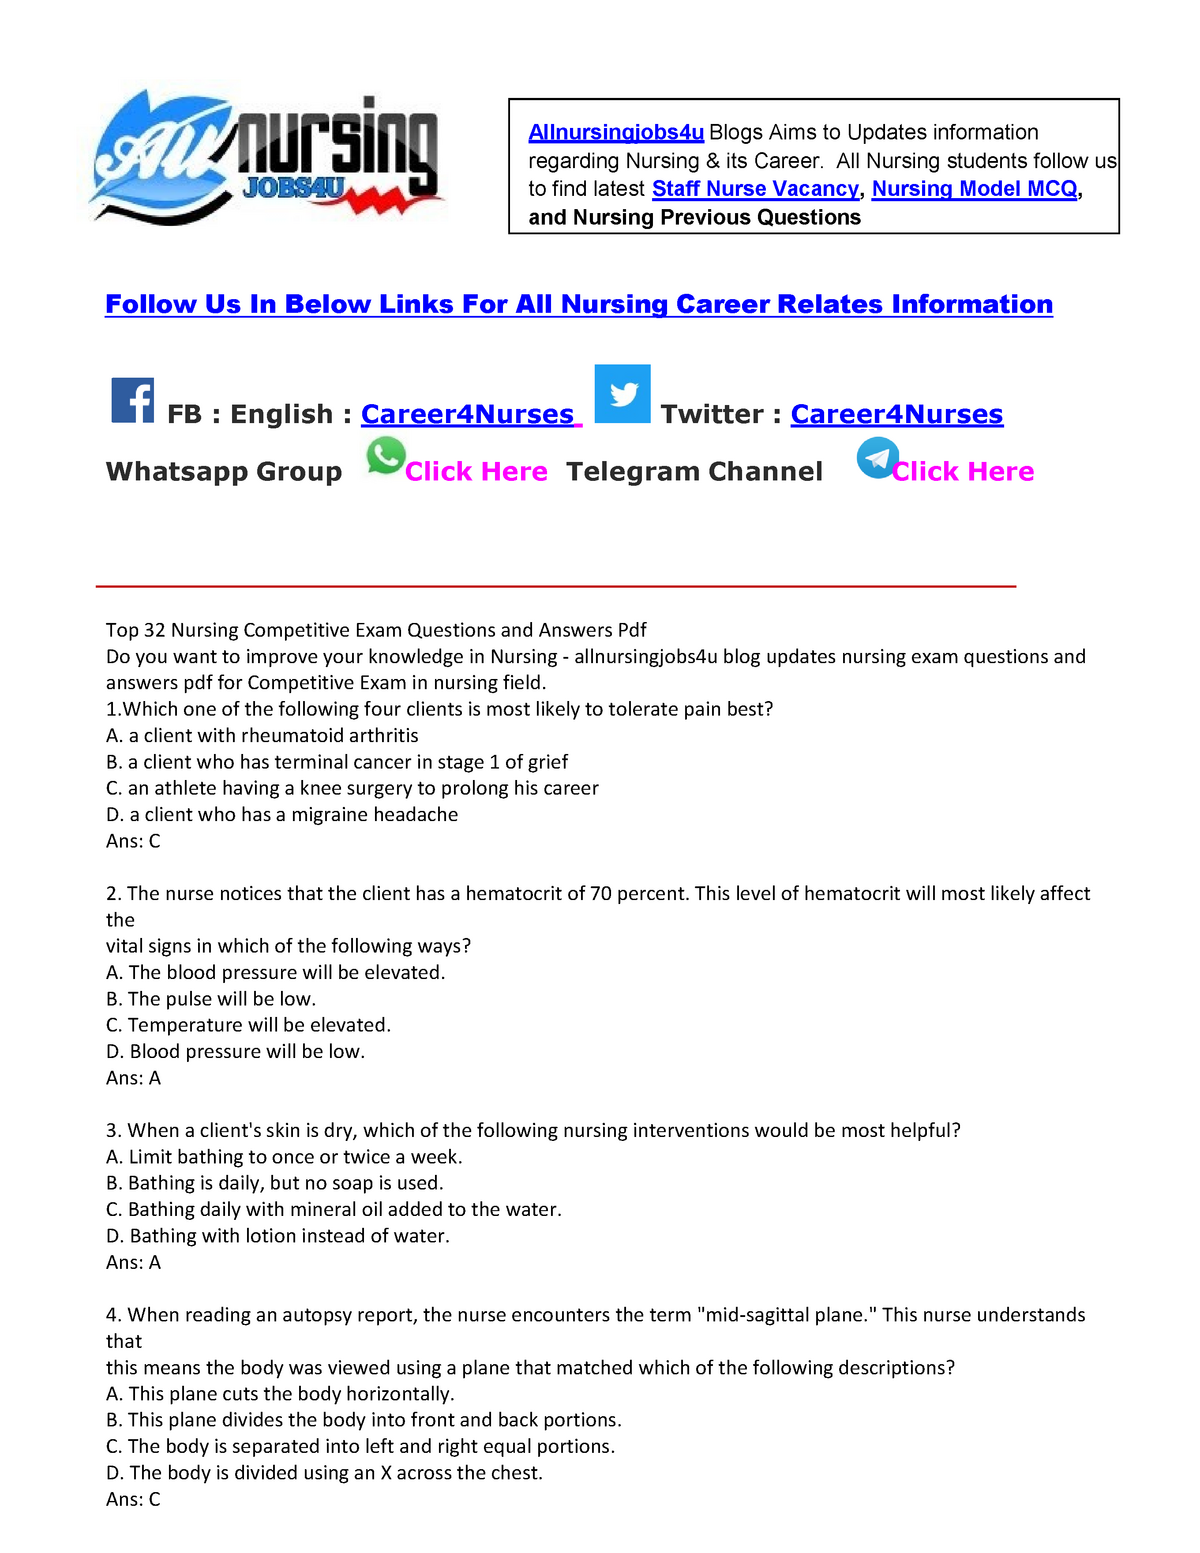 nursing-exam-questions-and-answers-pdf-allnursingjobs4u-blogs-aims-to-updates-information